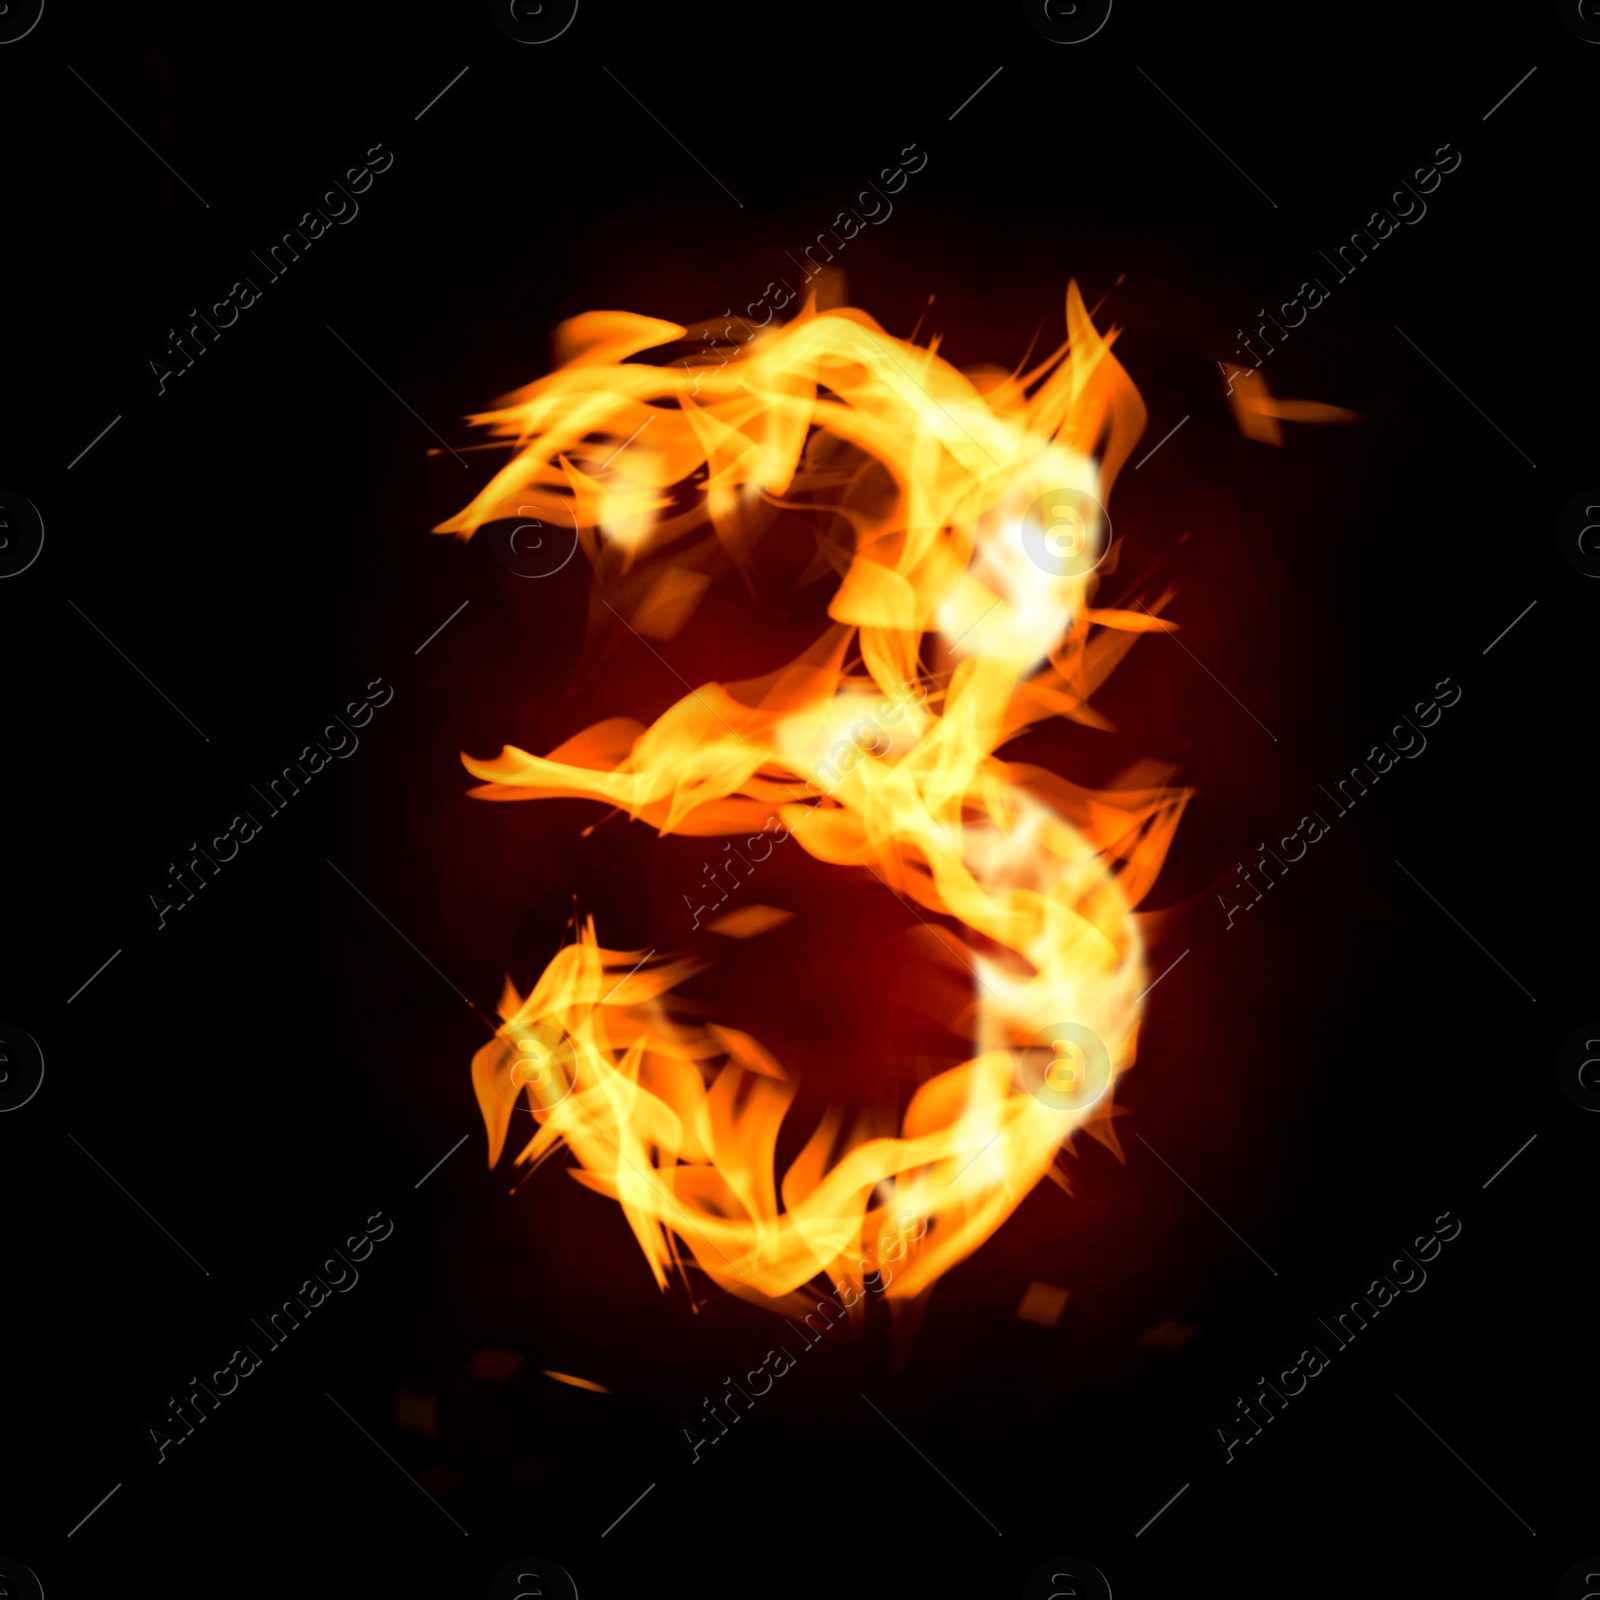 Image of Flaming 3 on black background. Stylized number design